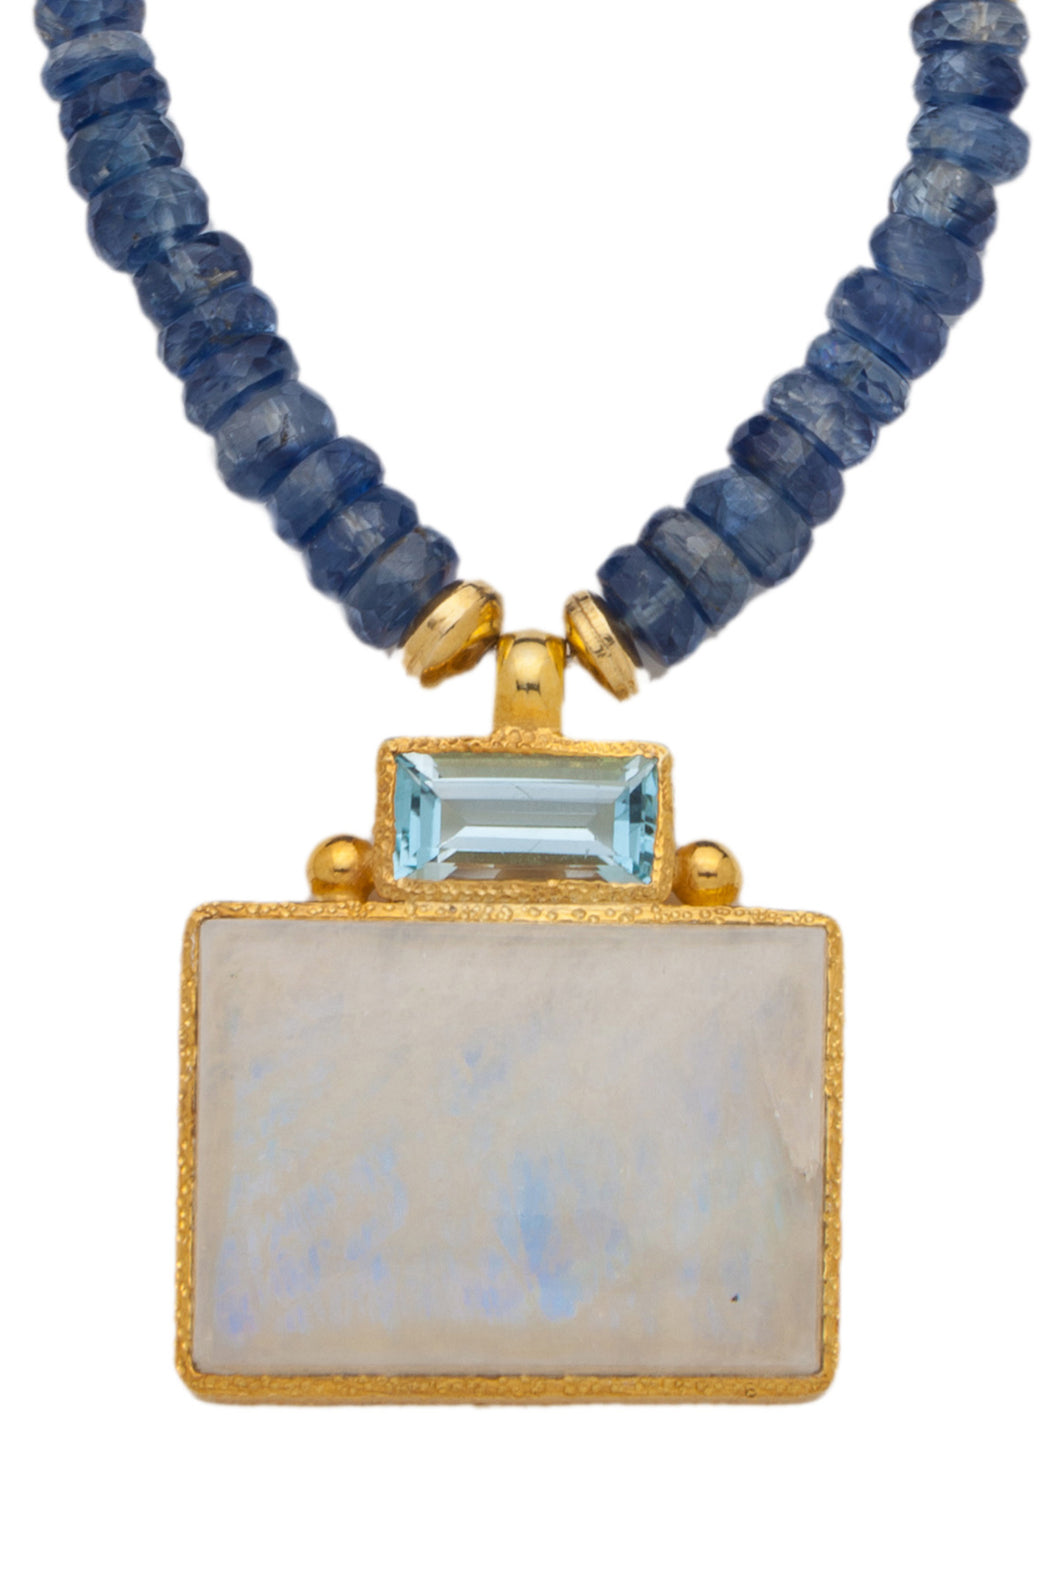 ONE OF A KIND Kyanite Necklace with Blue Topaz and Labradorite Pendant set in 24kt gold vermeil  NF288-KBTM